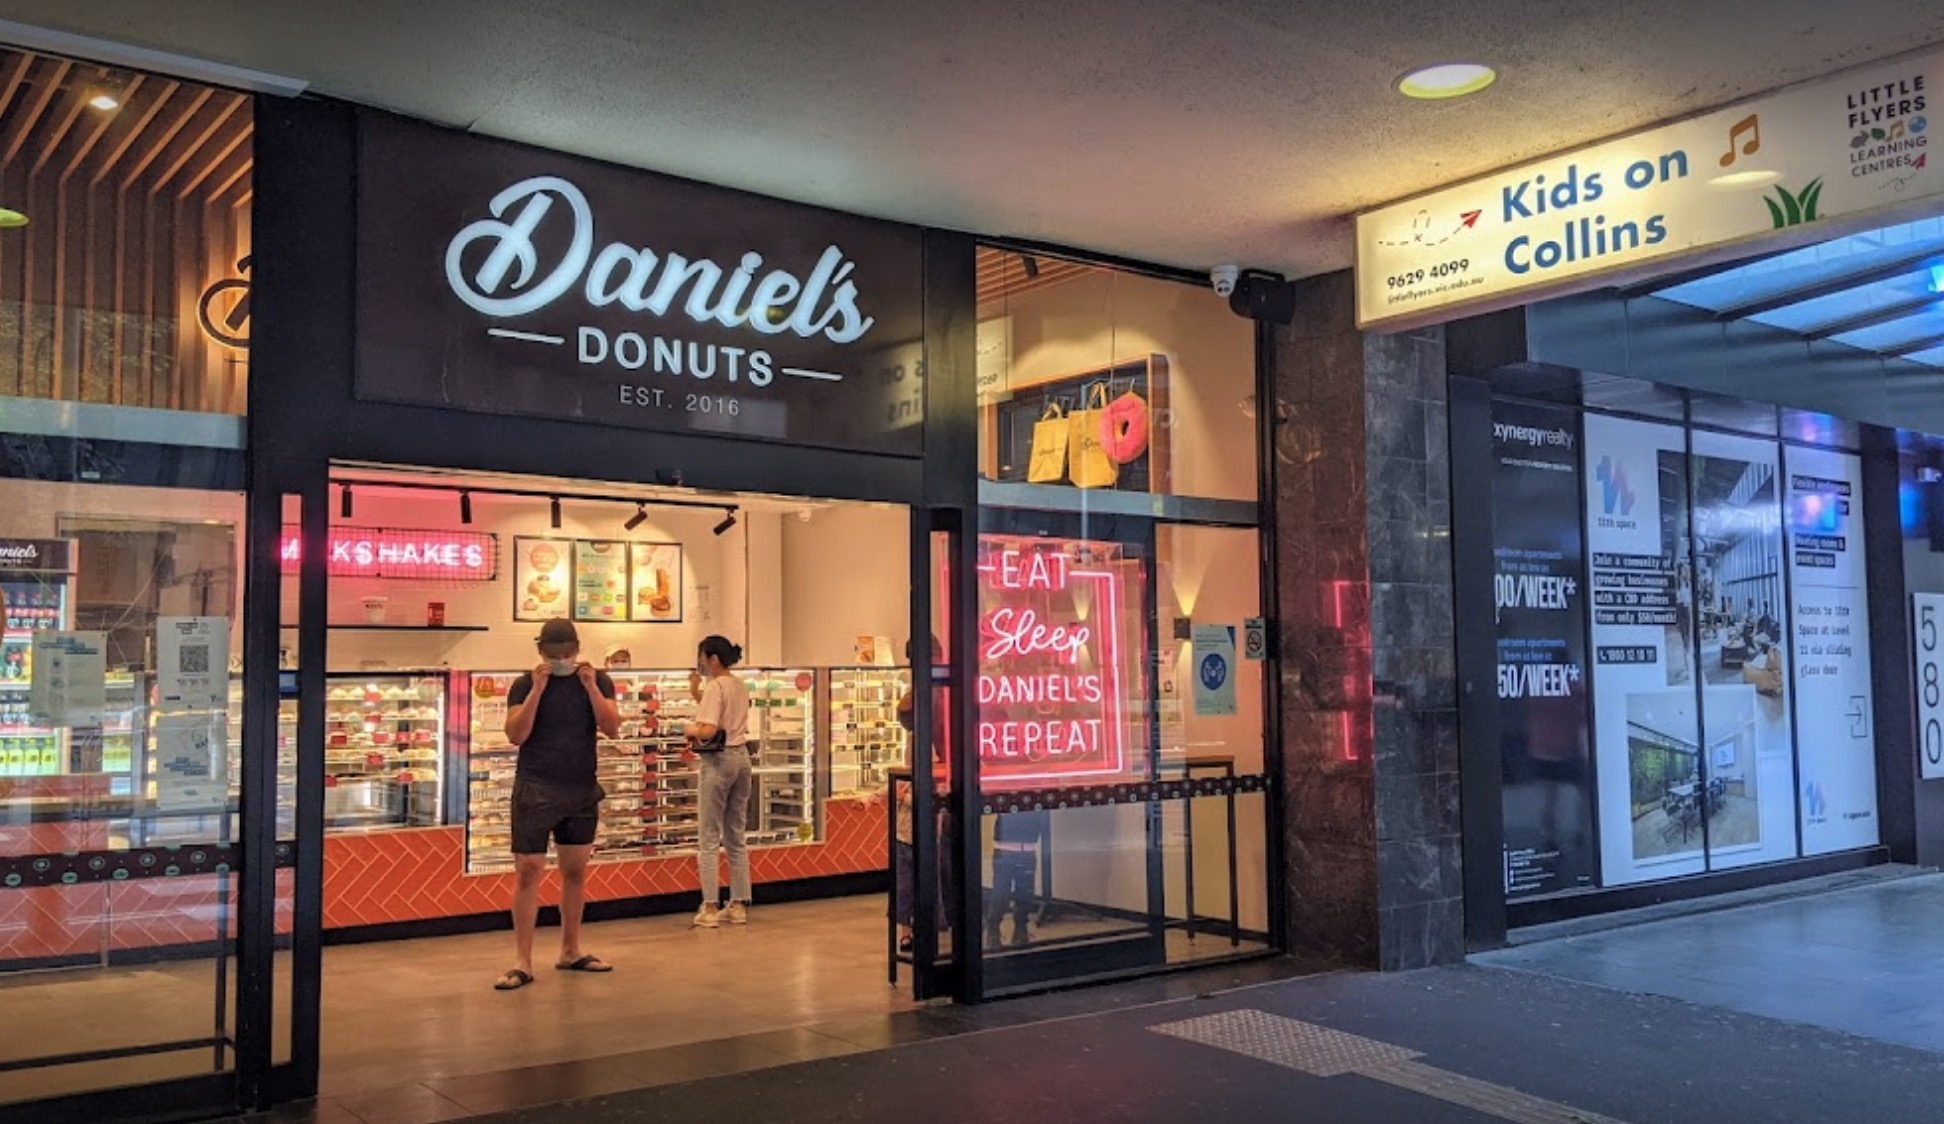 Daniel's donuts